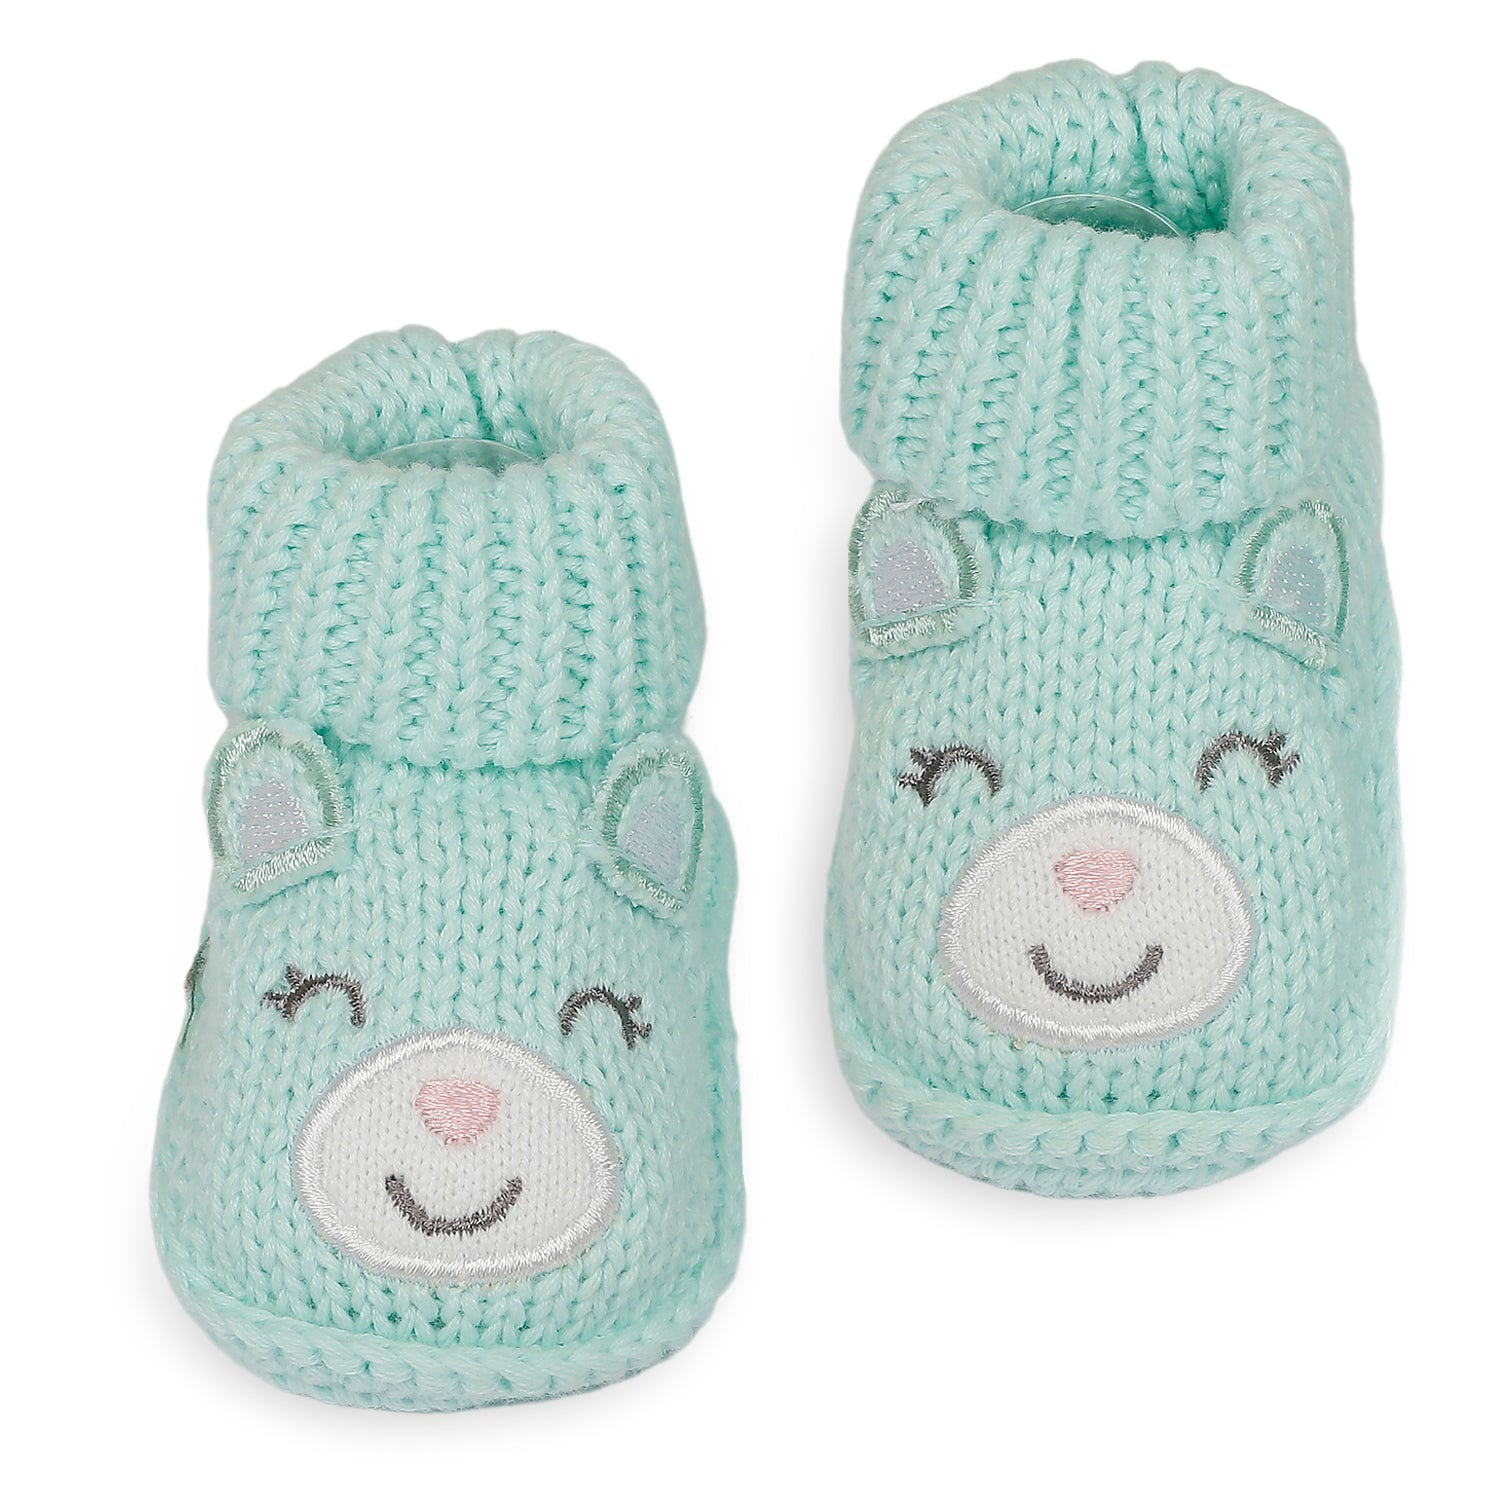 Baby Moo Blushing Newborn Crochet Socks Booties - Mint Green